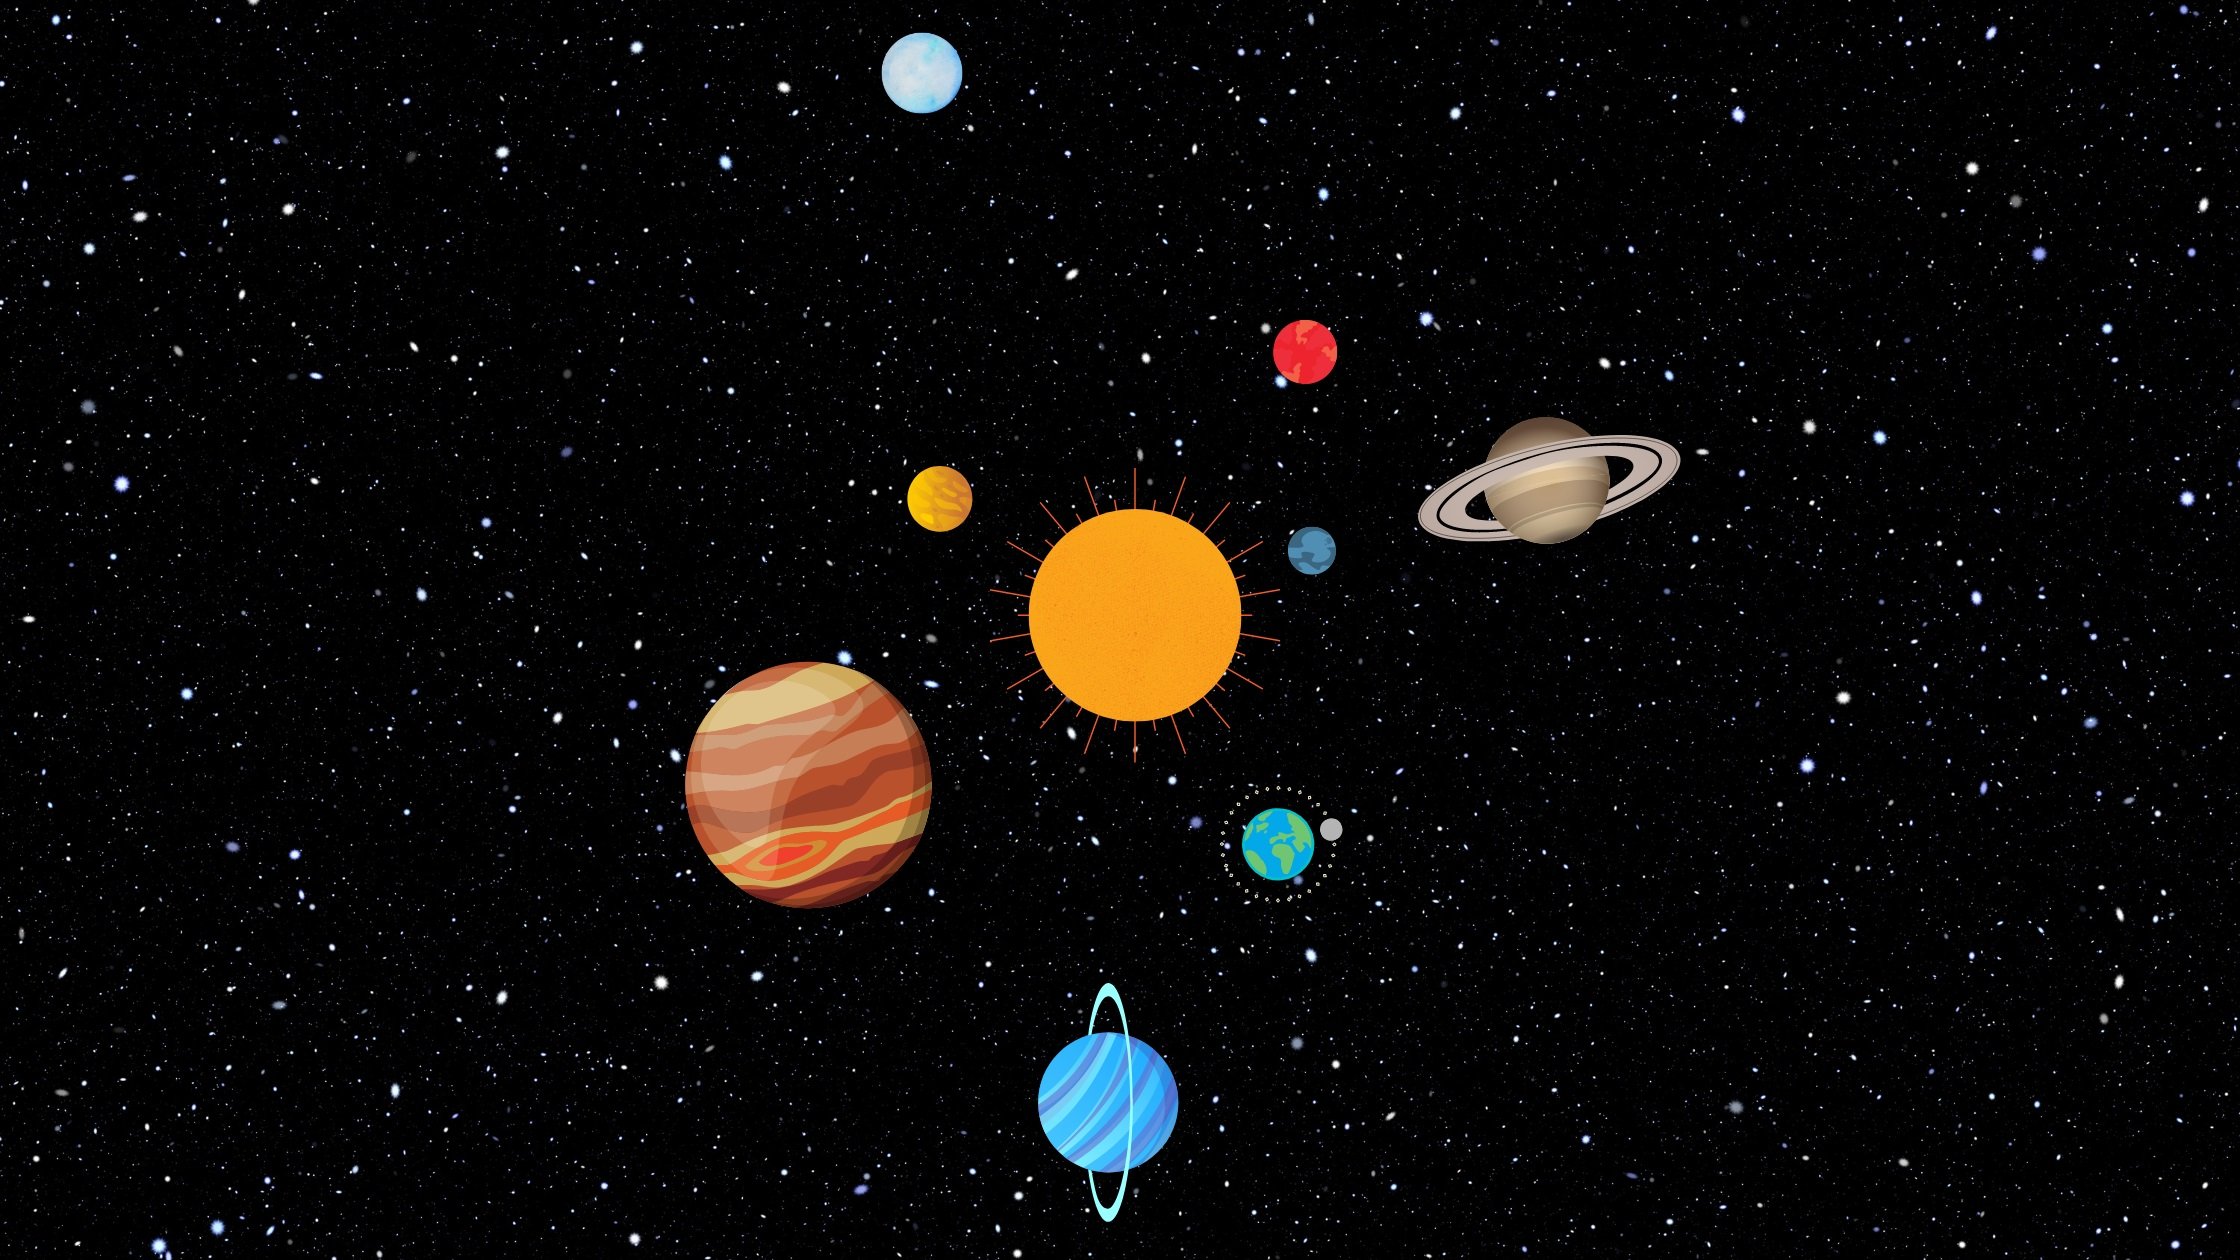 Cartoon planets orbit a cartoon sun on a starry background.